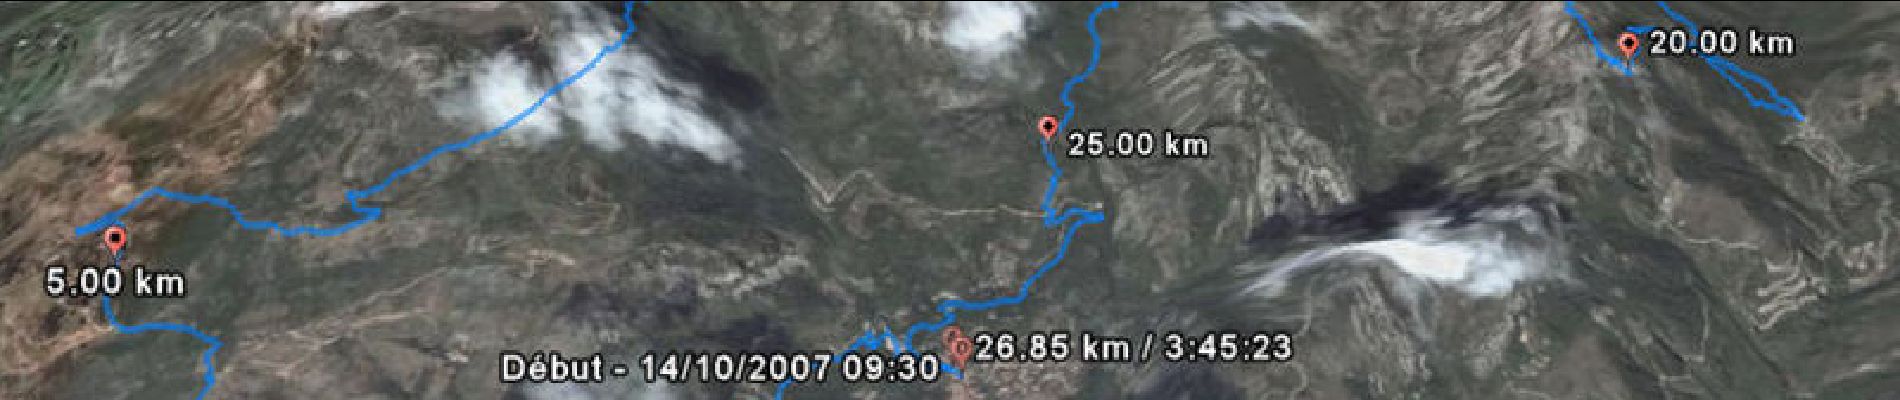 Excursión Carrera Gorbio - Trail de Gorbio 32km 2007 - Photo